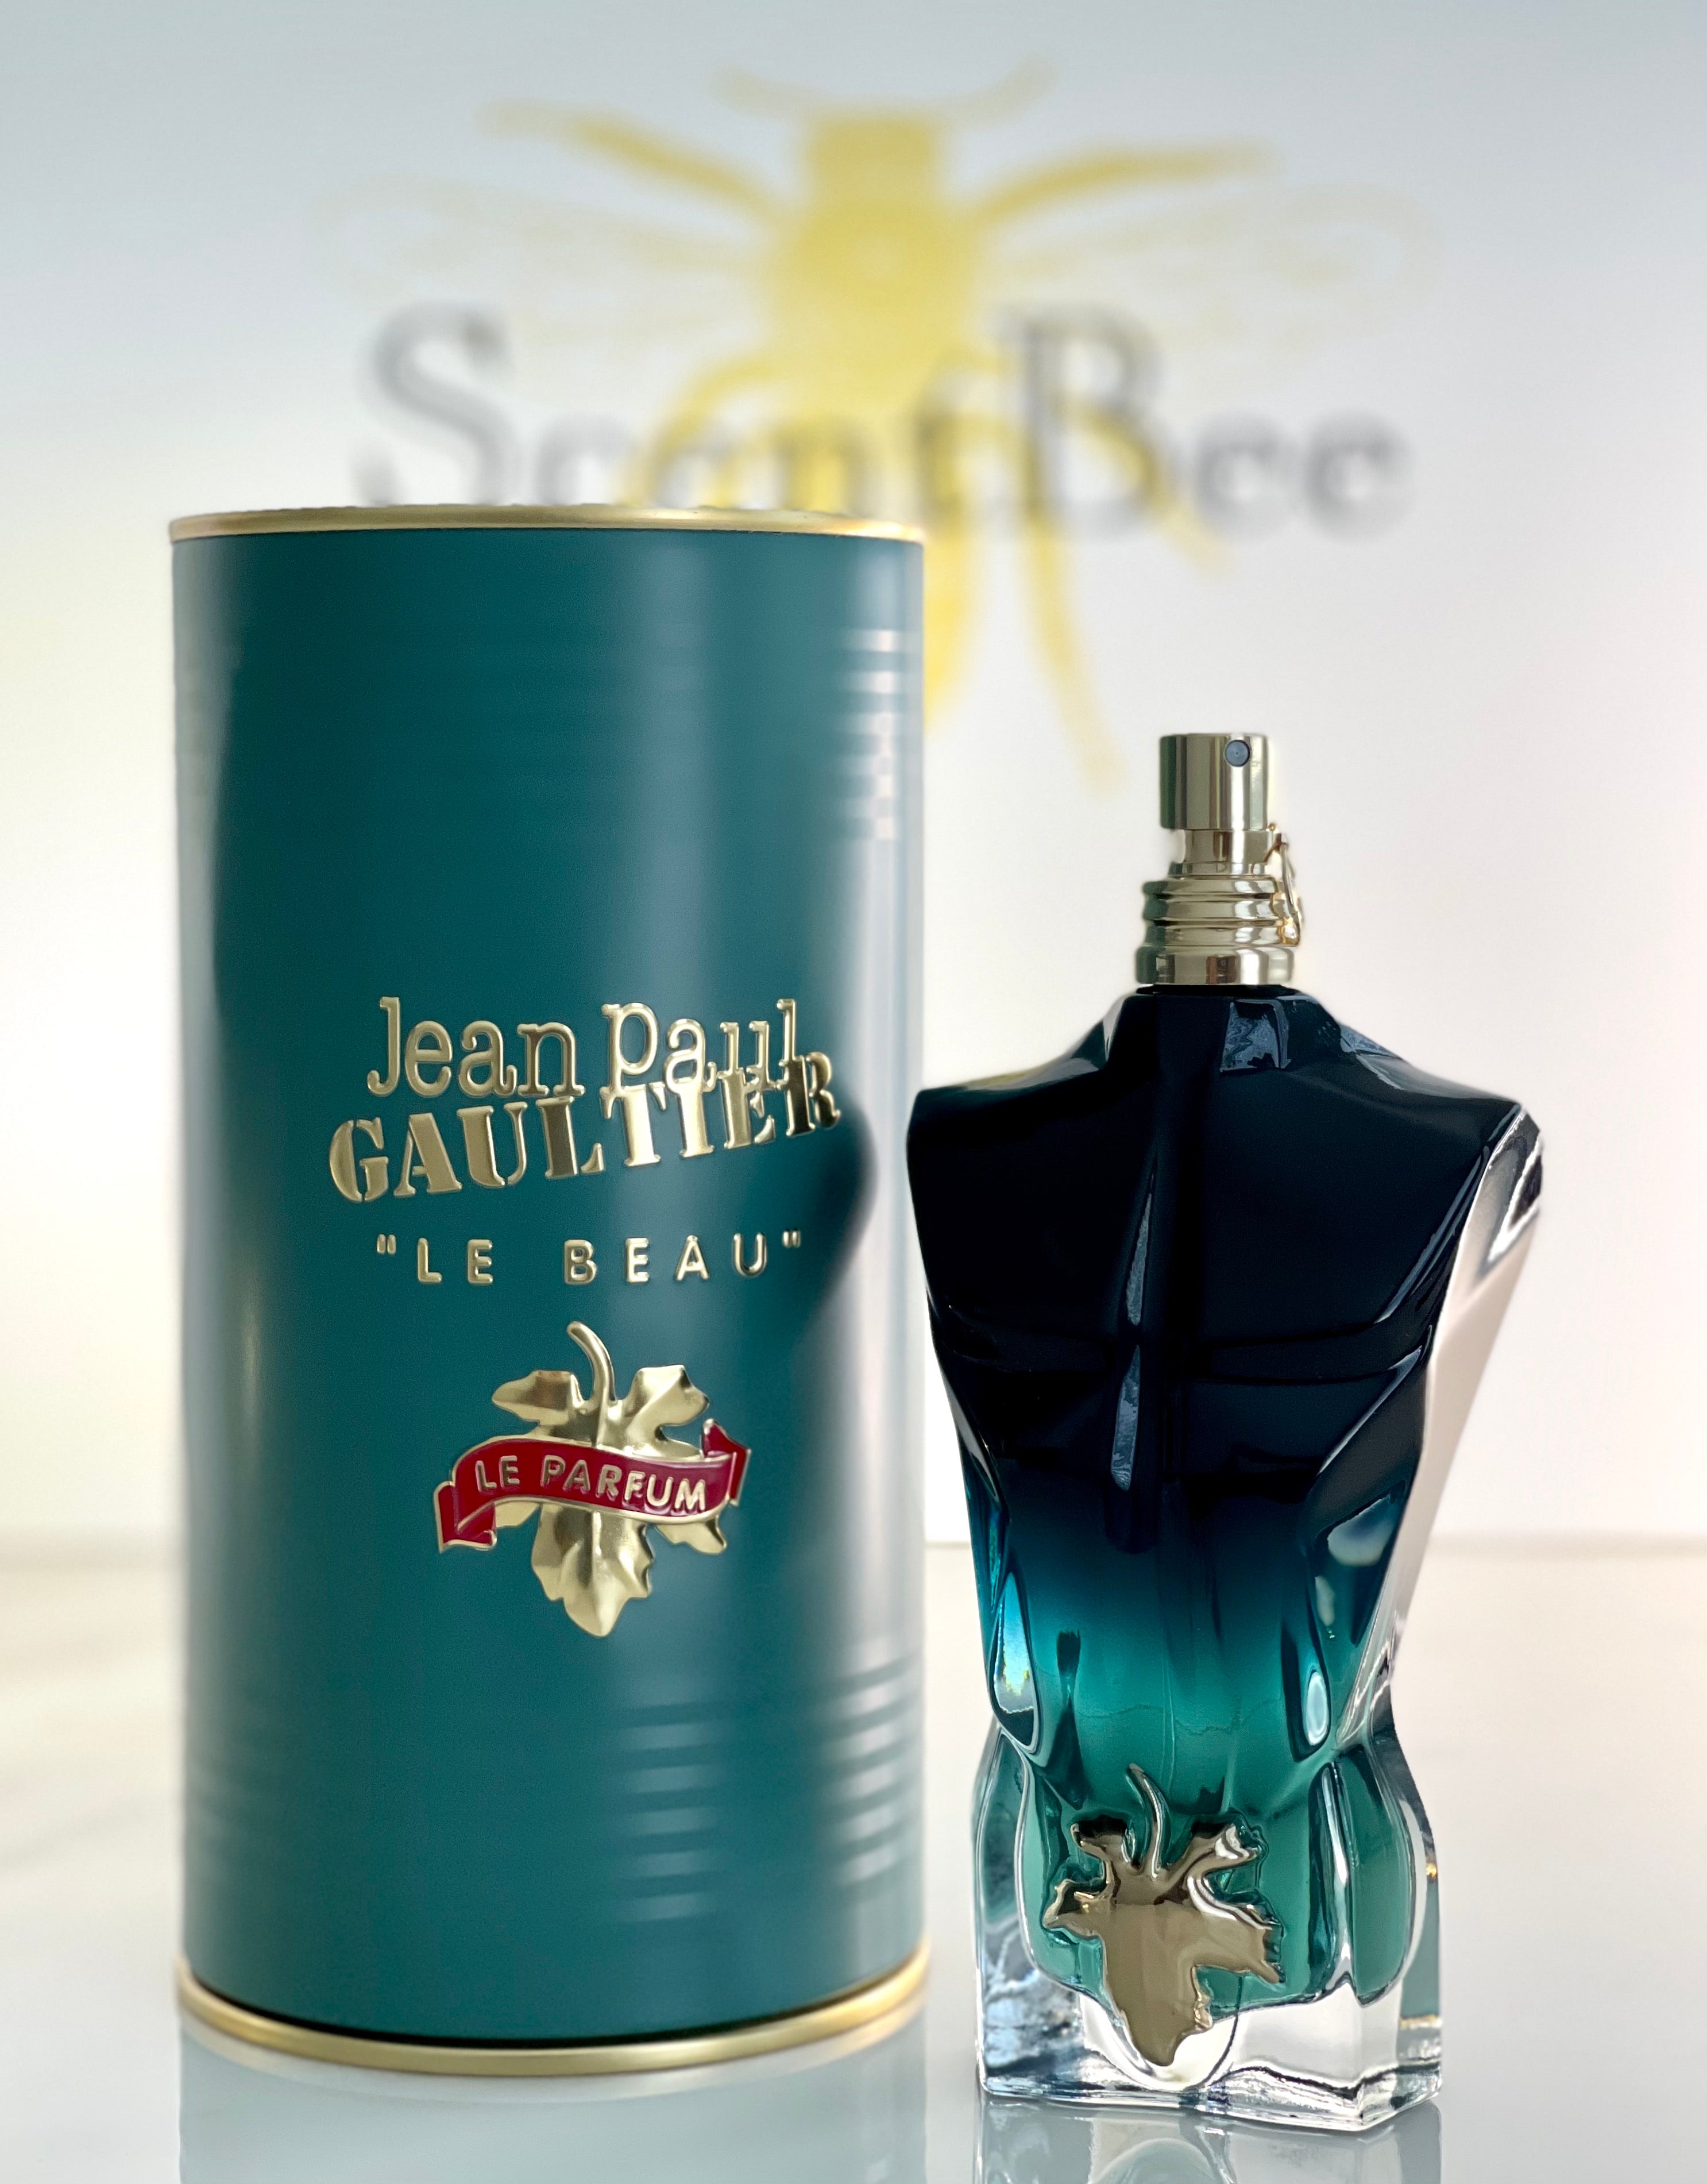 Le Beau Le Parfum by Jean Paul Gaultier | Scentbee USA